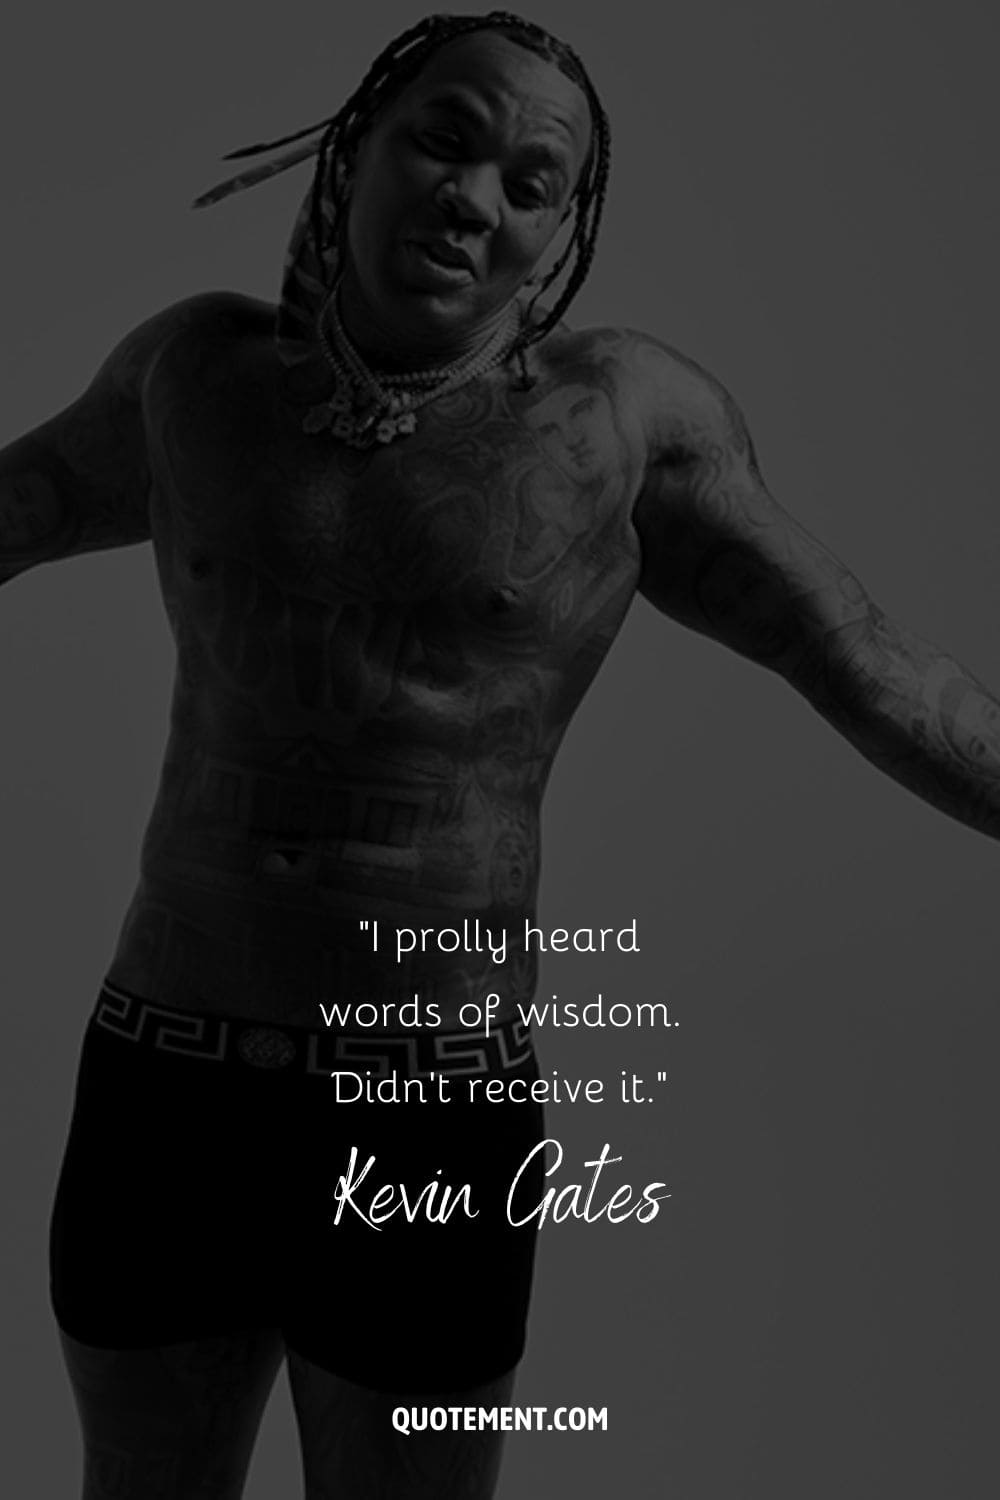 “I prolly heard words of wisdom. Didn't receive it.” – Kevin Gates